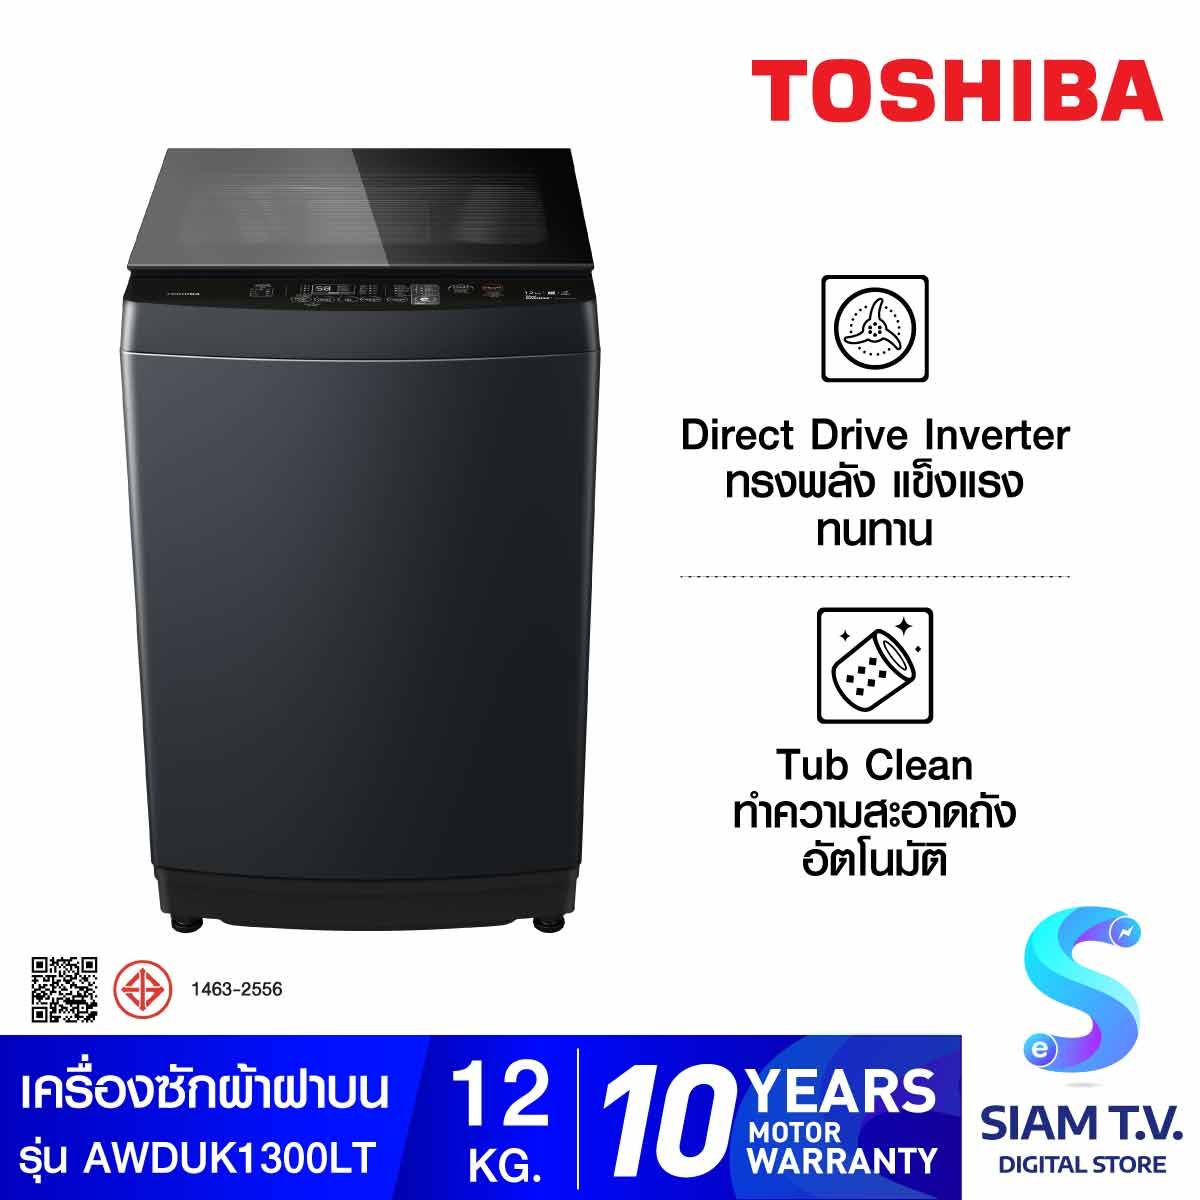 TOSHIBA เครื่องซักผ้าฝาบน 12KG.Drive INVERTER รุ่น AW-DUK1300LT(MK)